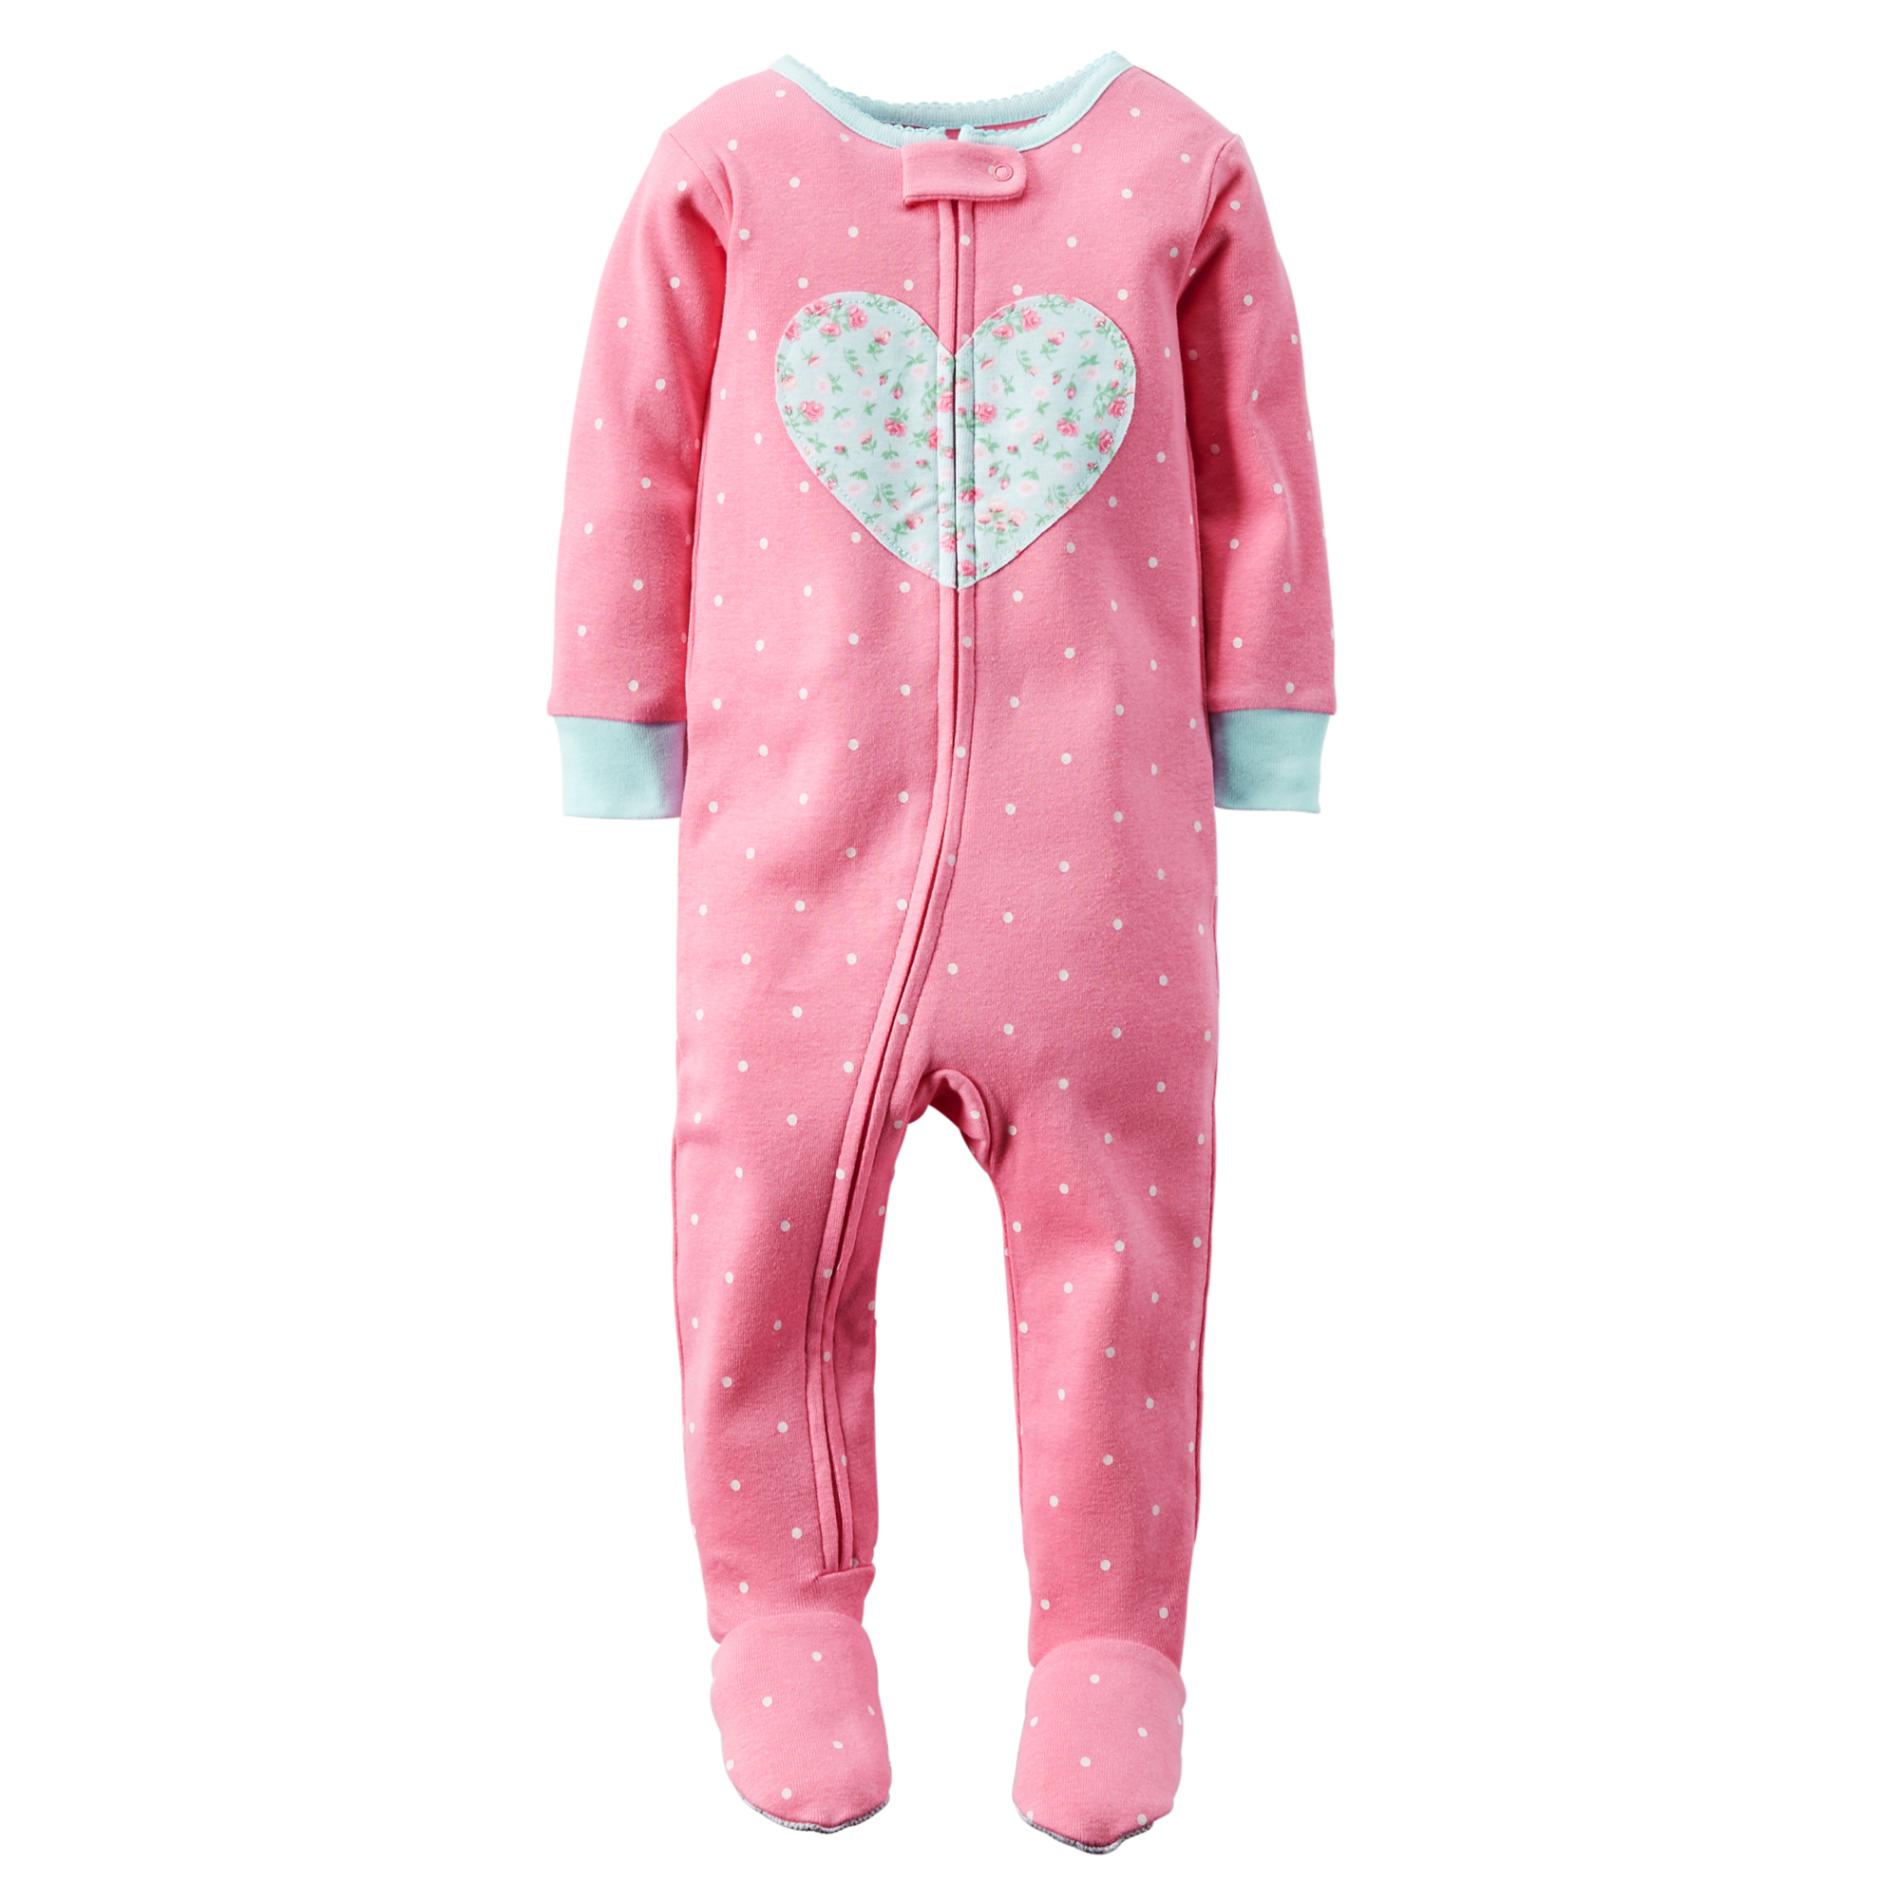 Carter's Infant & Toddler Girl's Footed Pajamas - Polka Dot